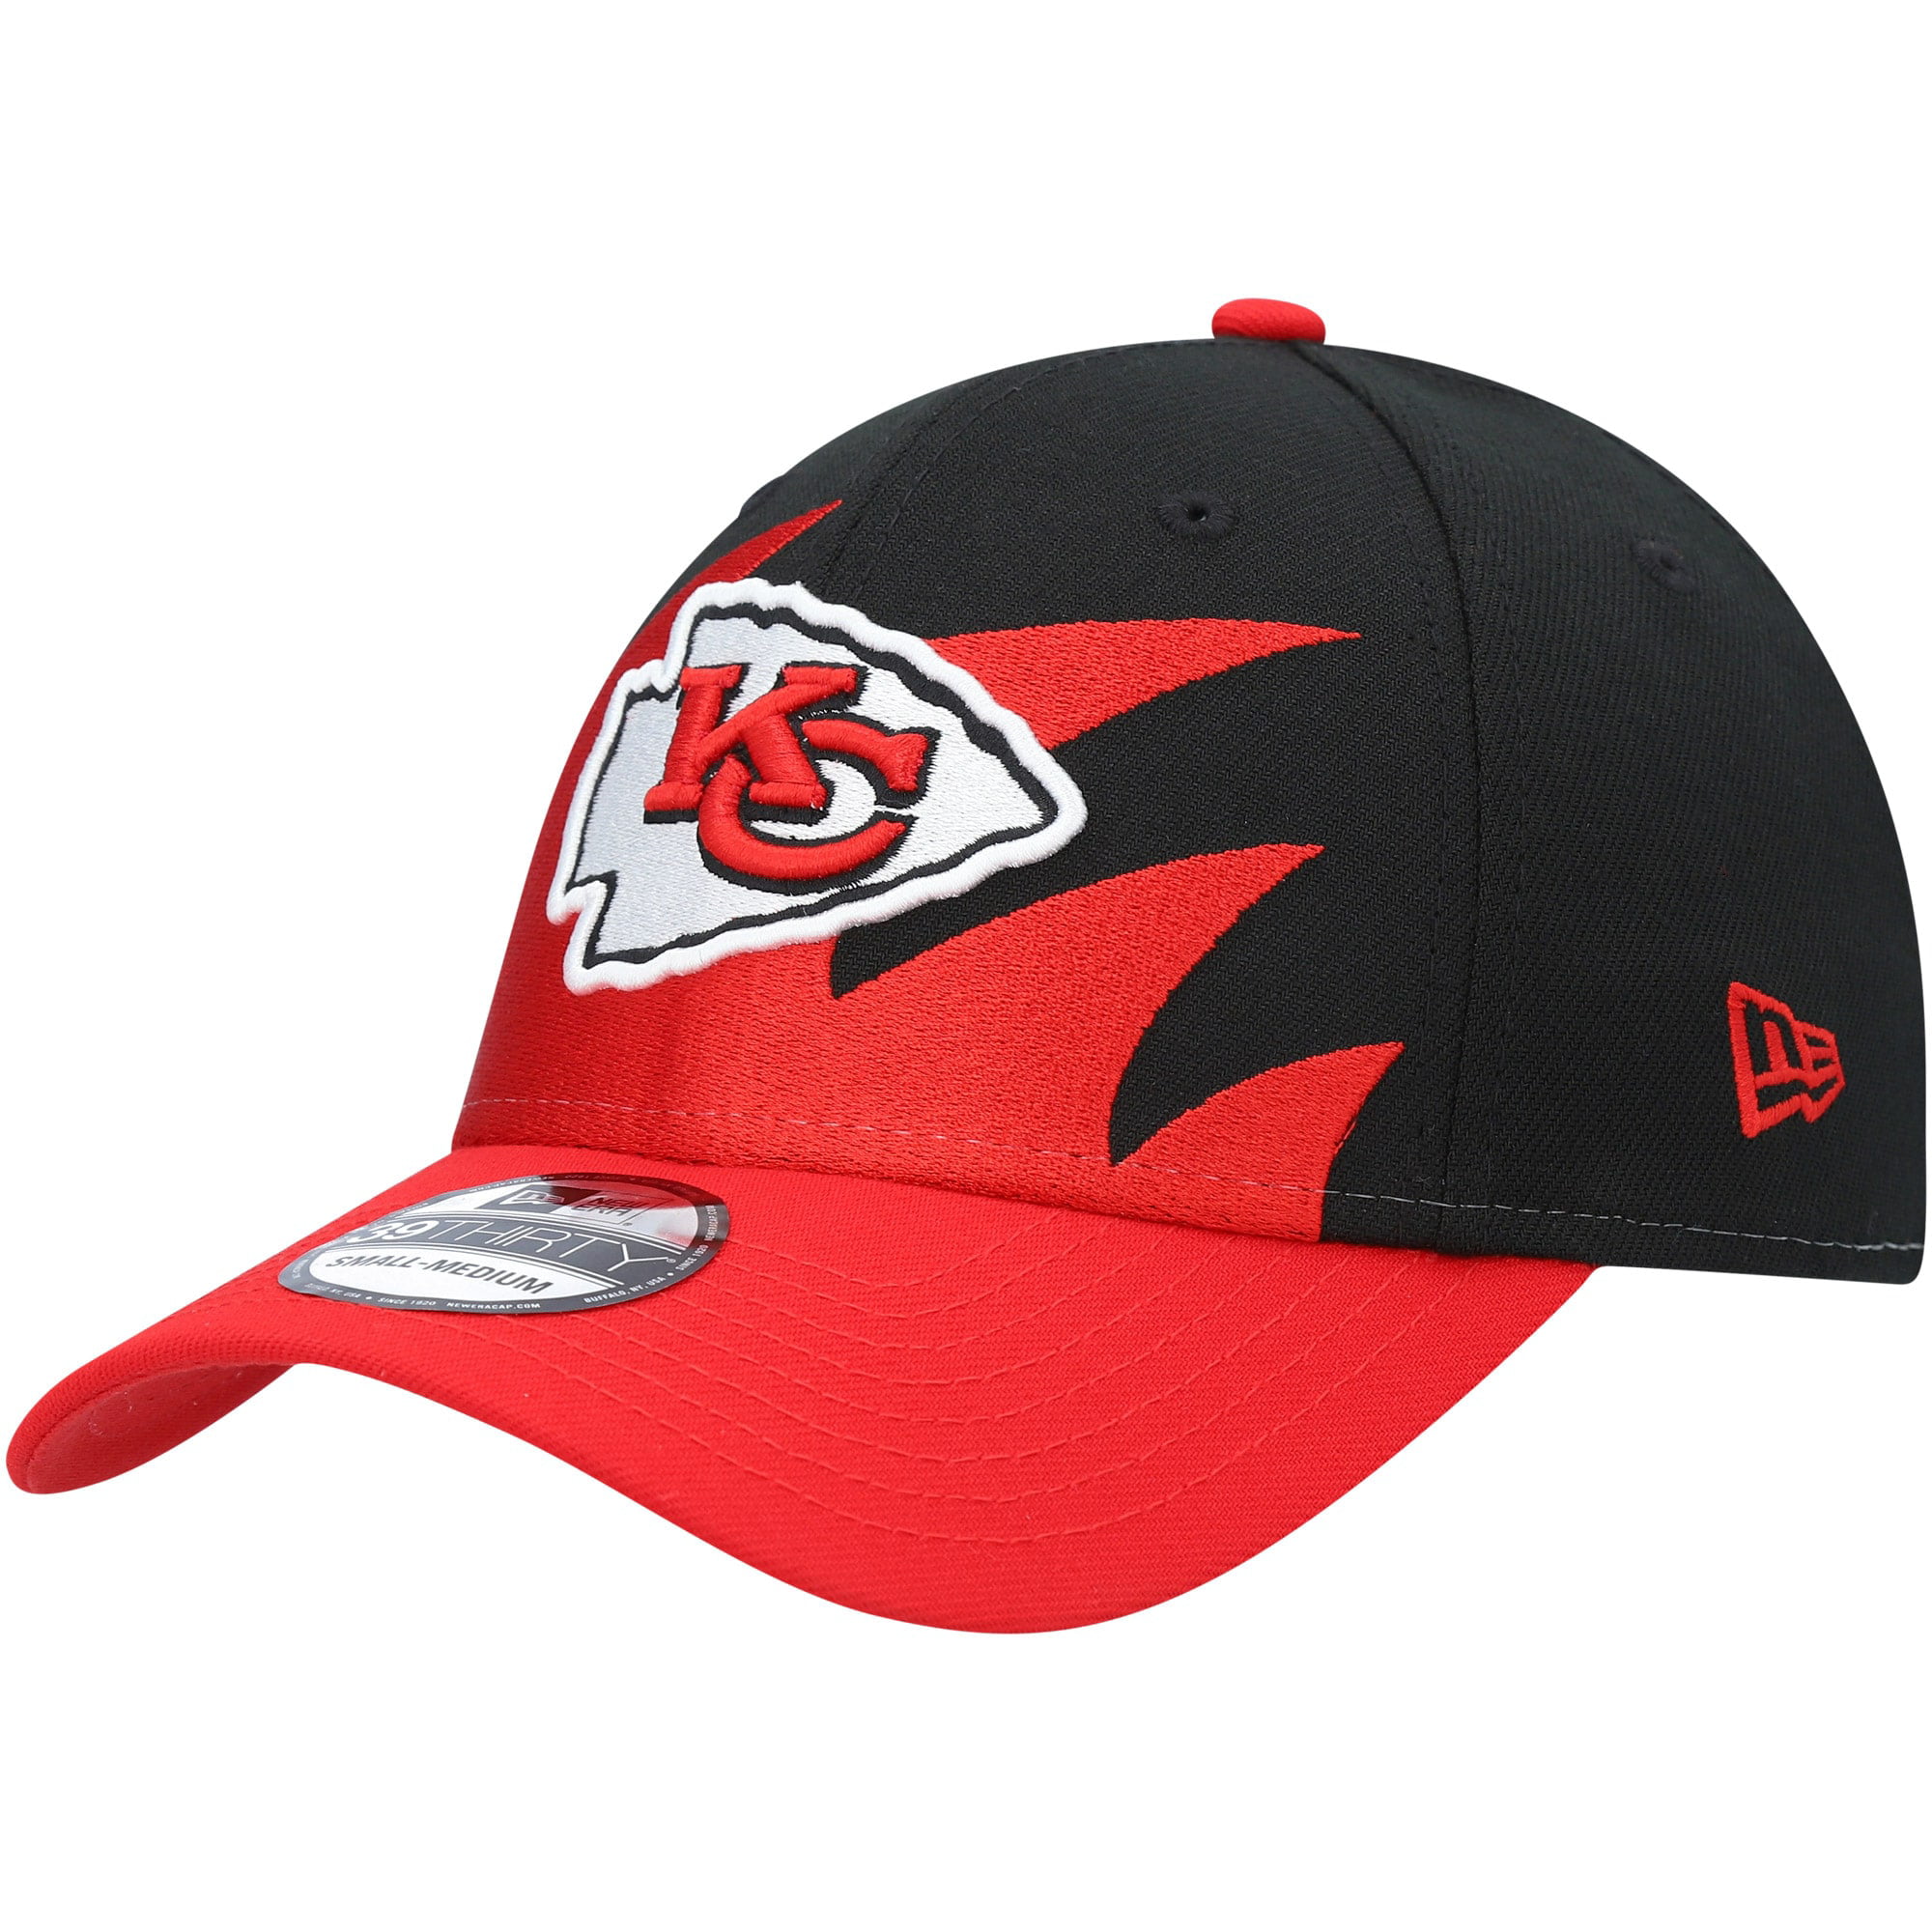 Male Kansas City Chiefs Hats - Walmart.com